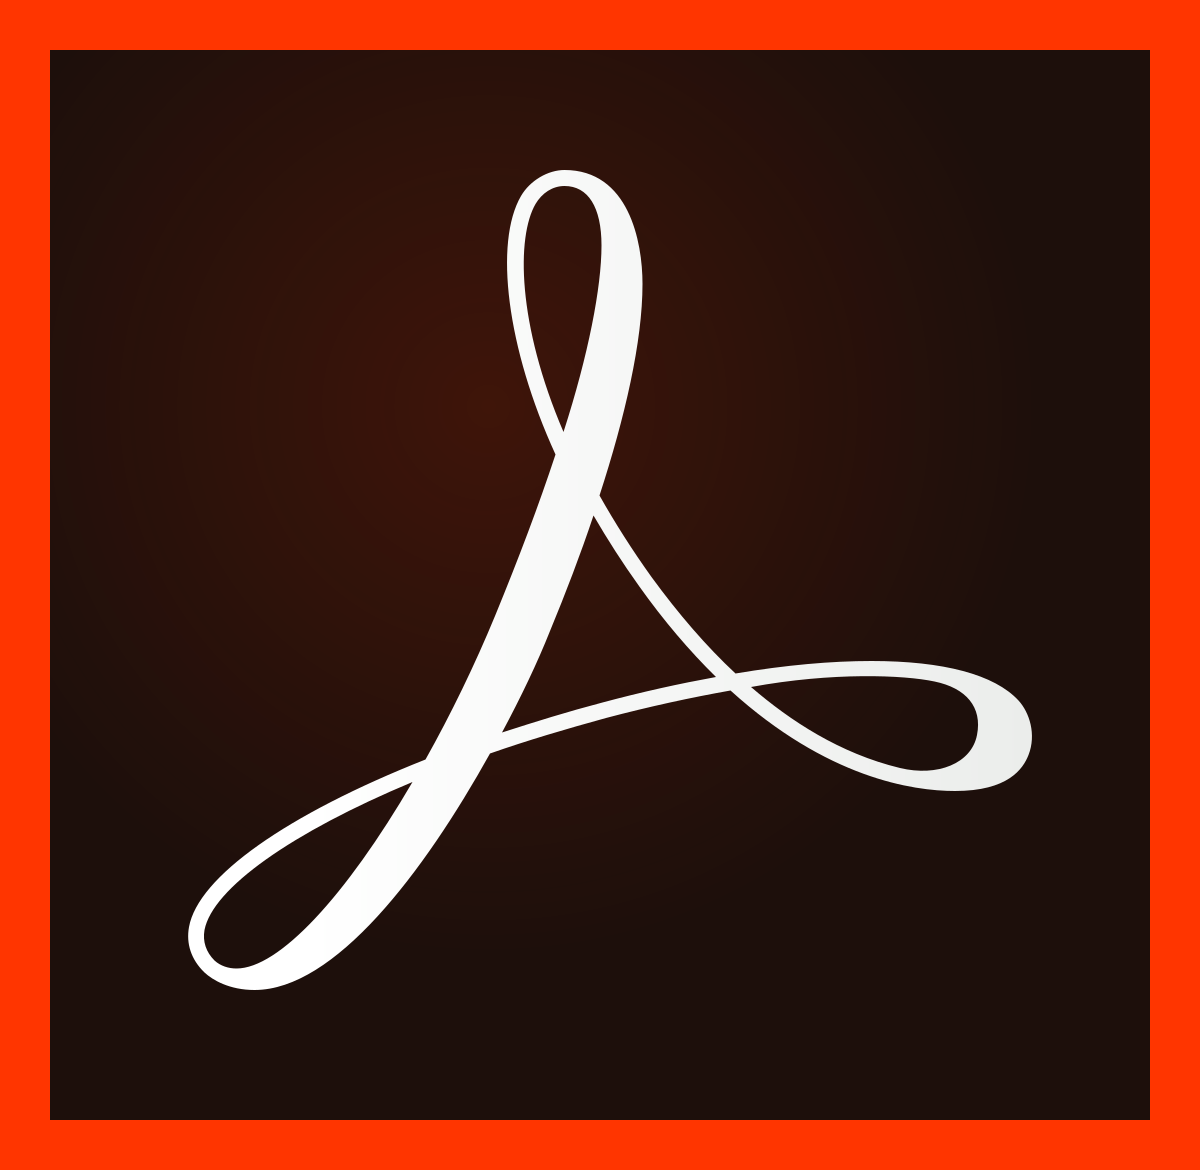 Adobe acrobat professional 7 keygen free download for pc